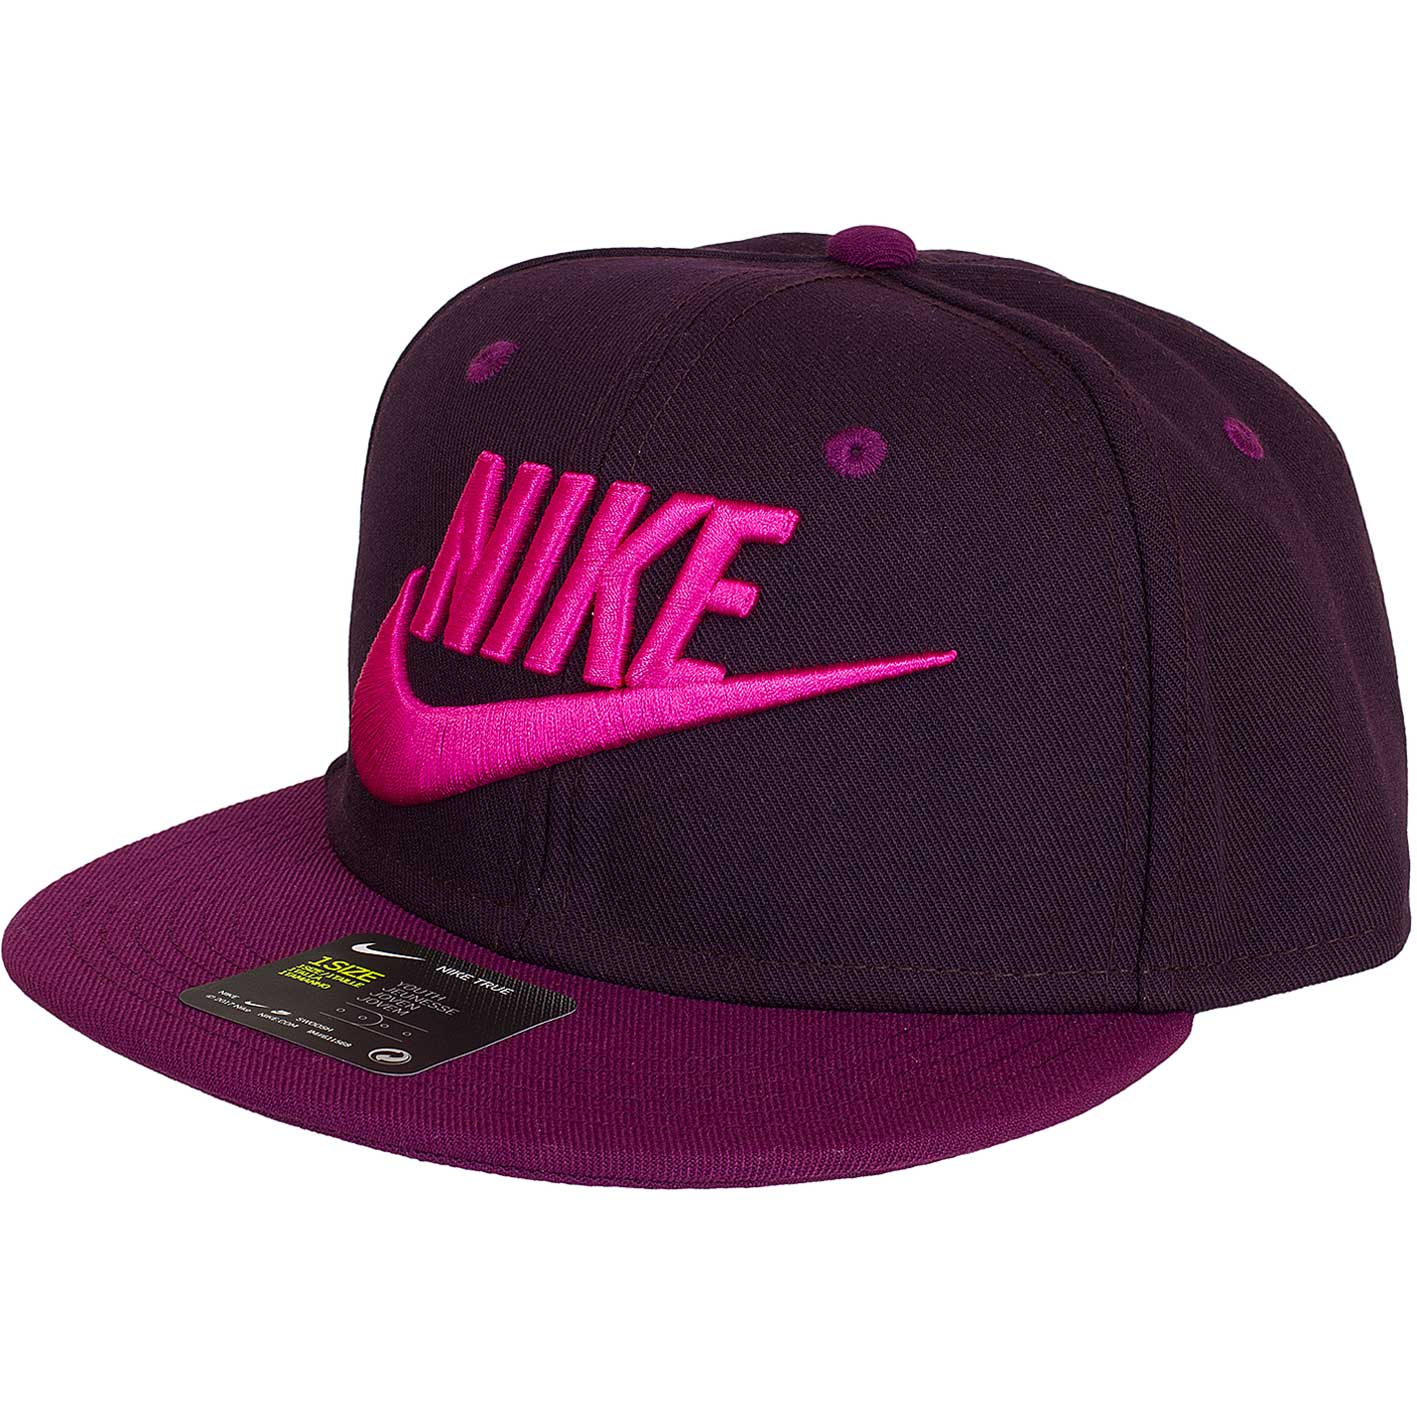 ☆ Nike Kinder Snapback Cap Futura True wine/pink - hier bestellen!